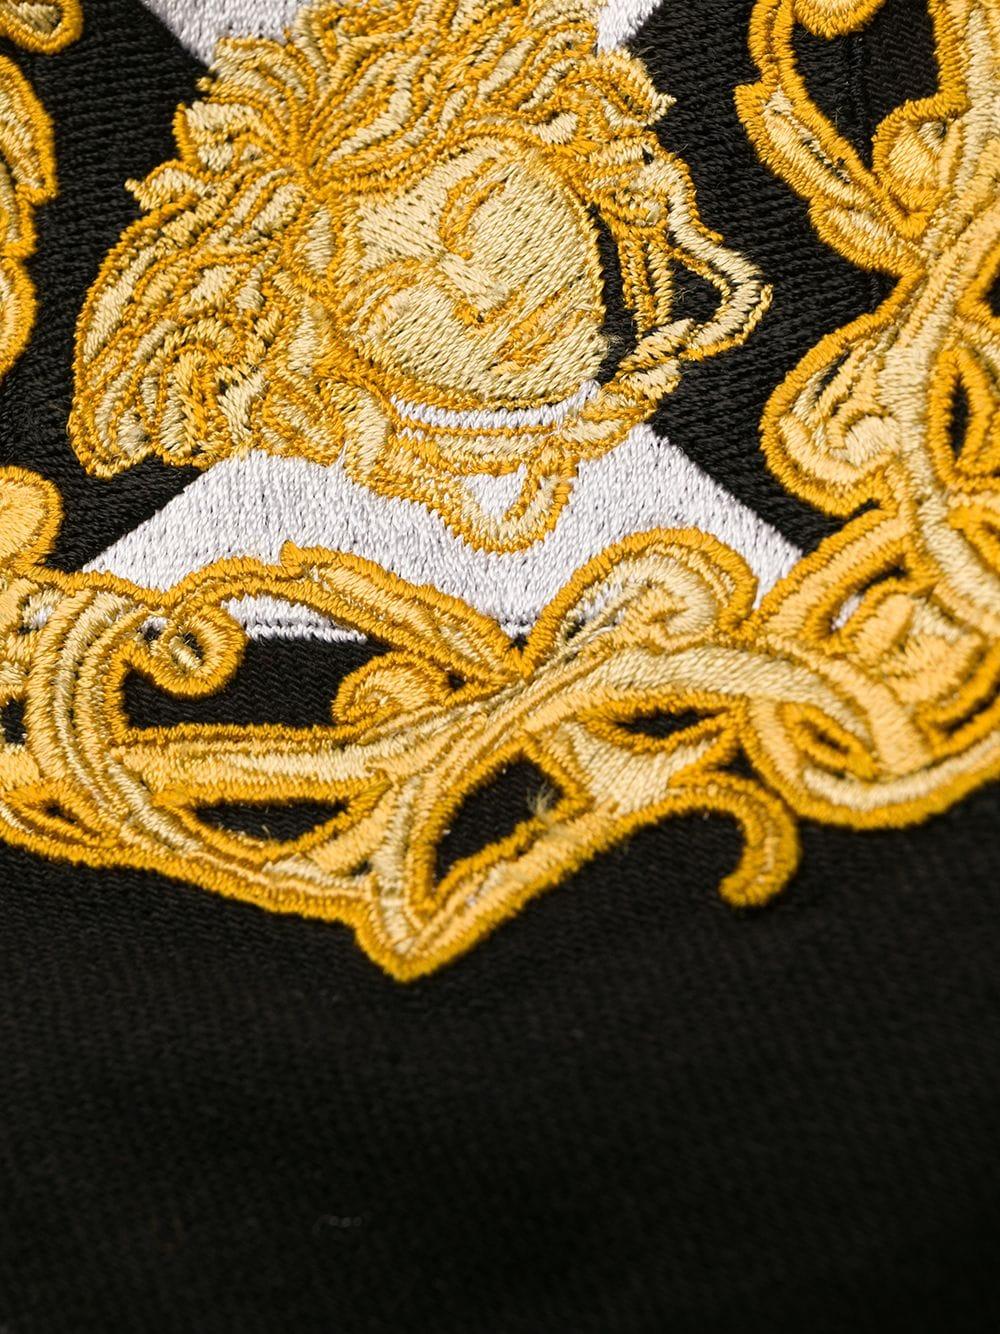 Gucci Versace Medusa Logo 3 Embroidery Design - Emblanka